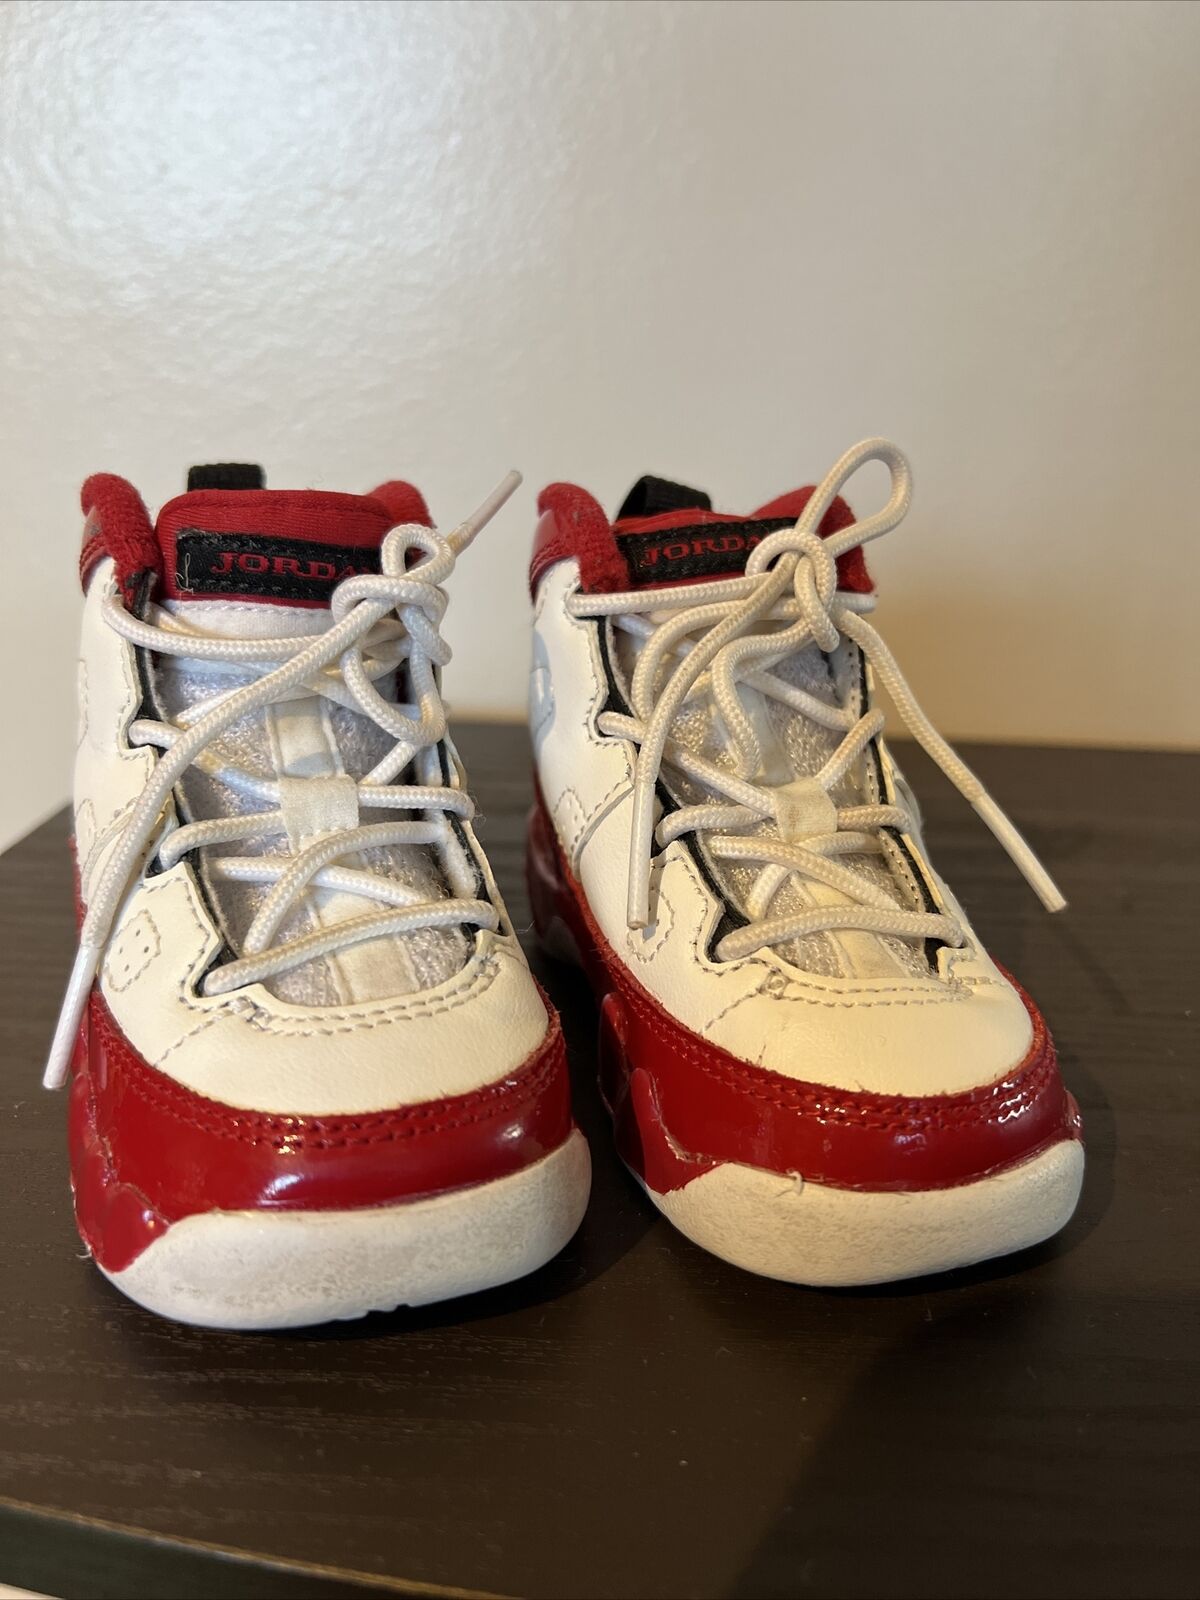 Toddler Nike Air Jordan Retro White & Red Gym Shoes 401812-160 4C Neutral Gender